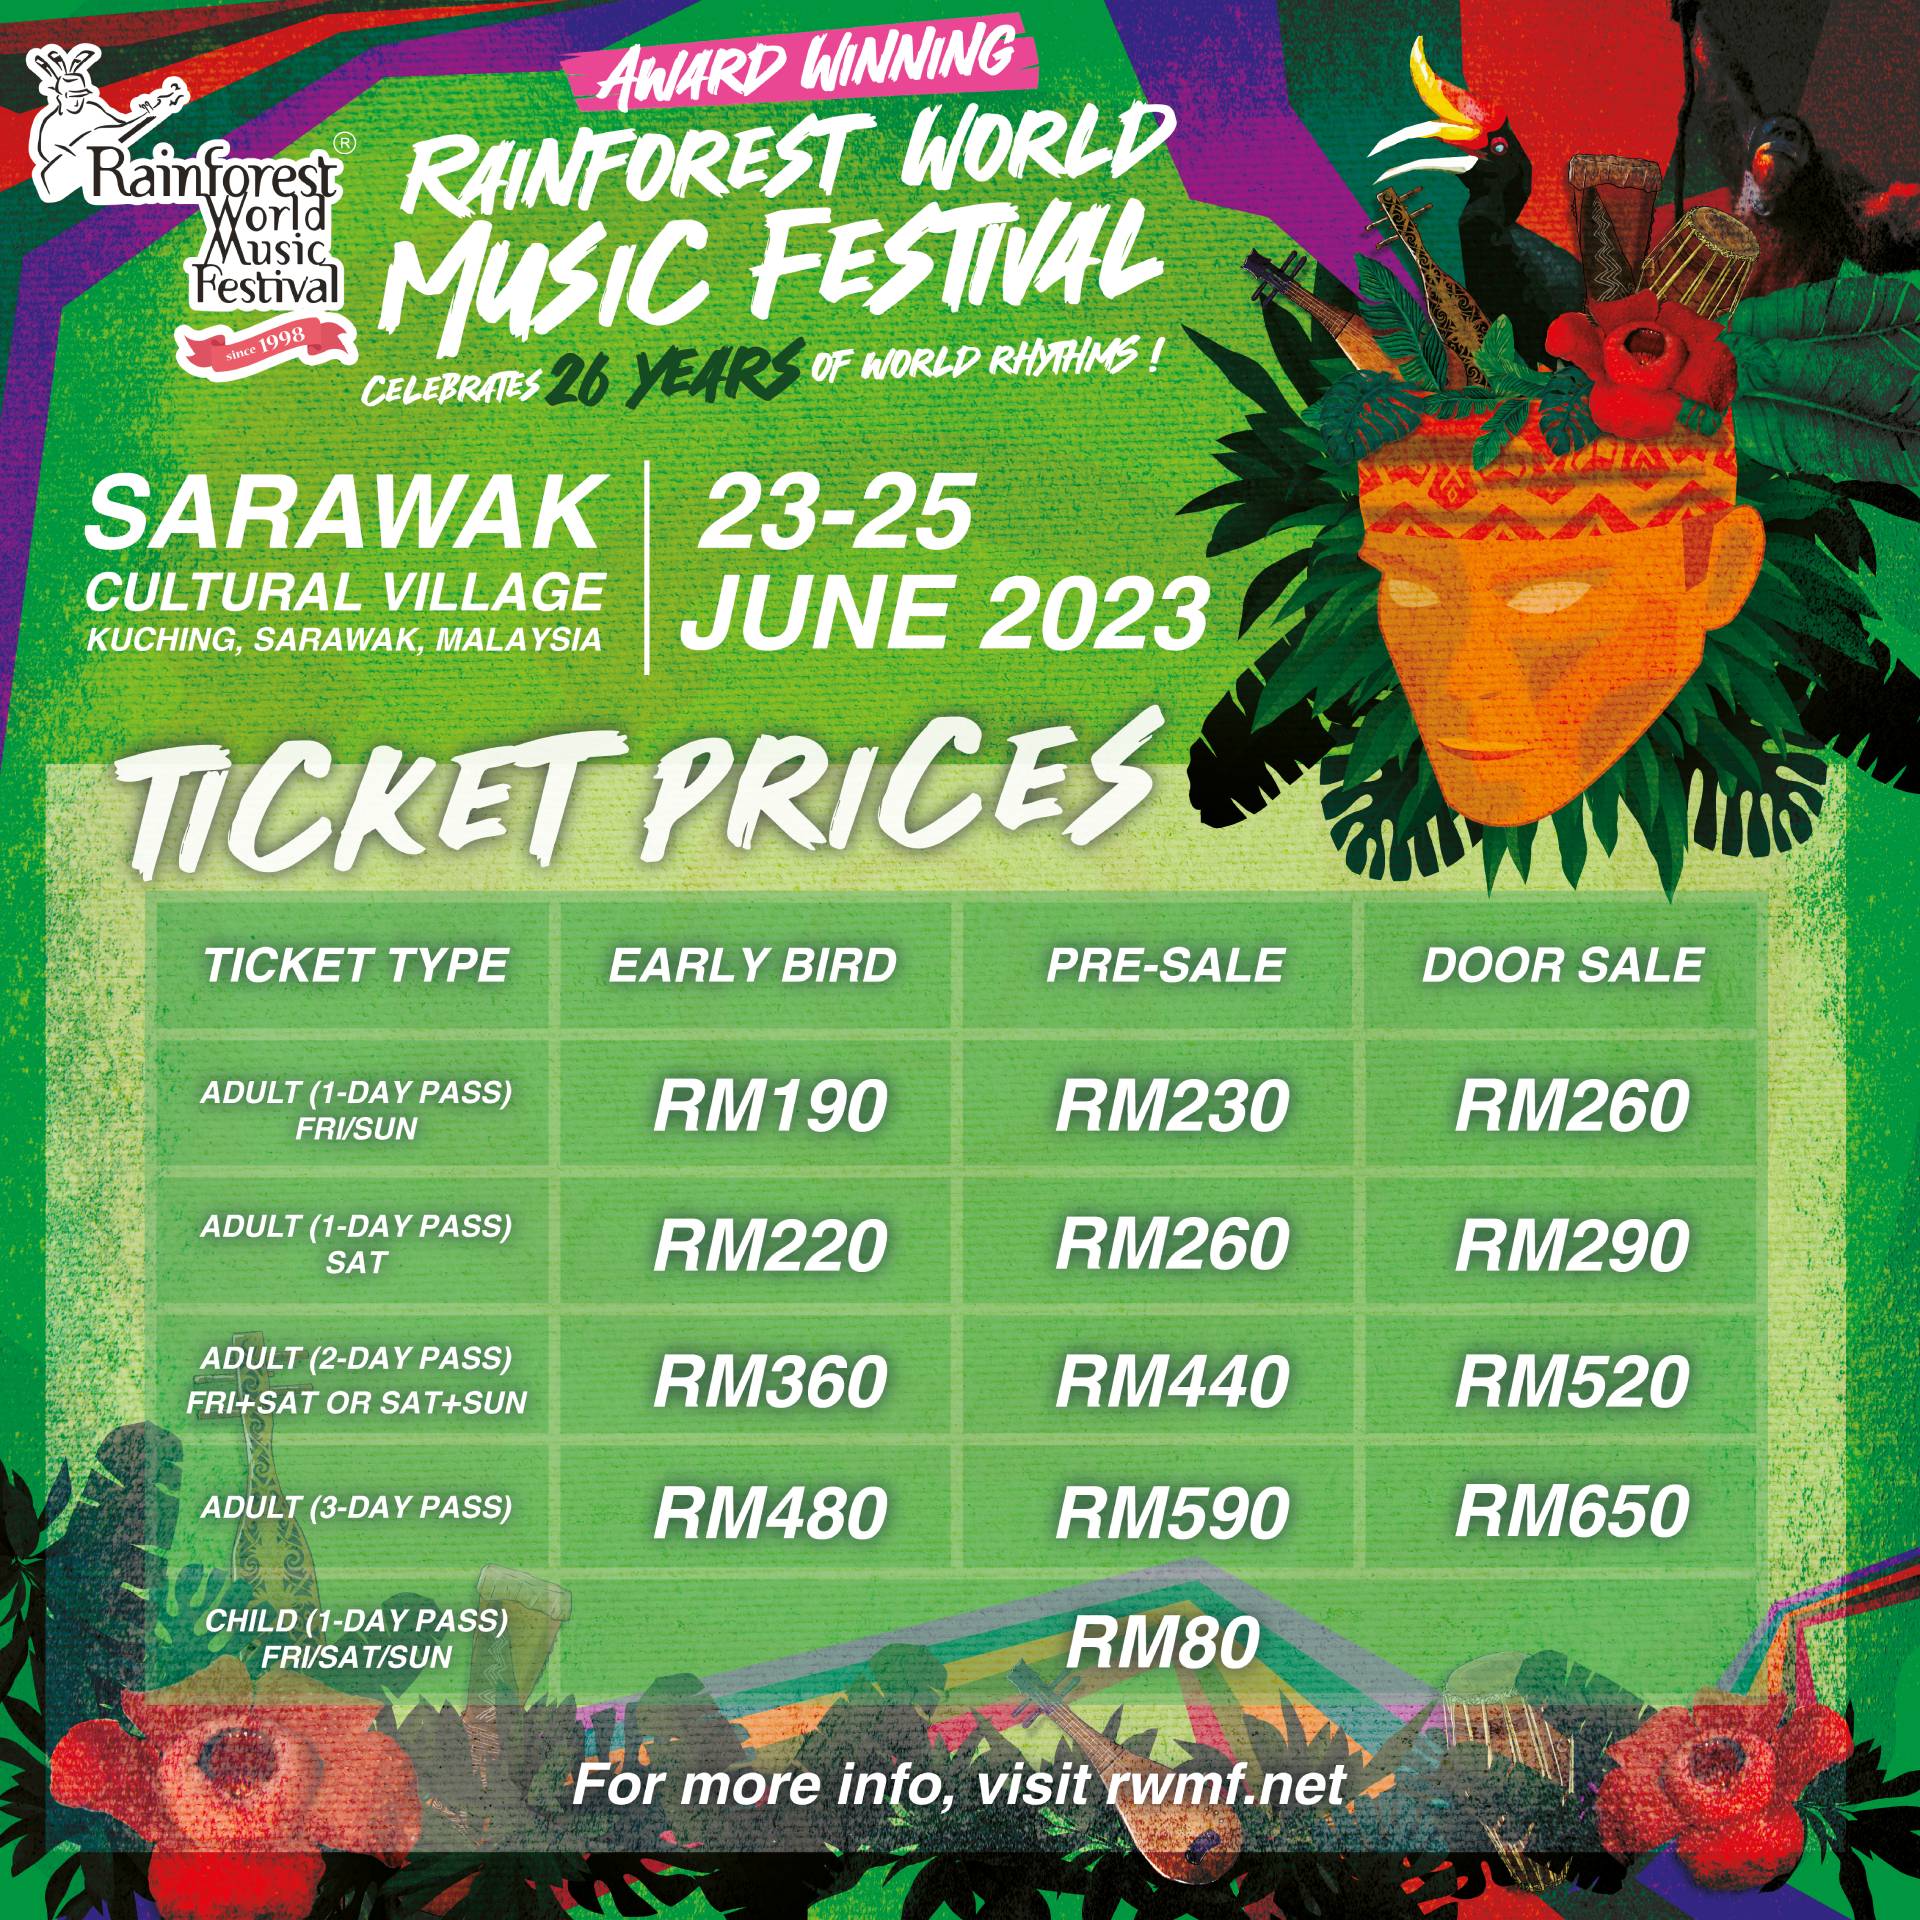 Sarawak Rainforest World Music Festival - tickets